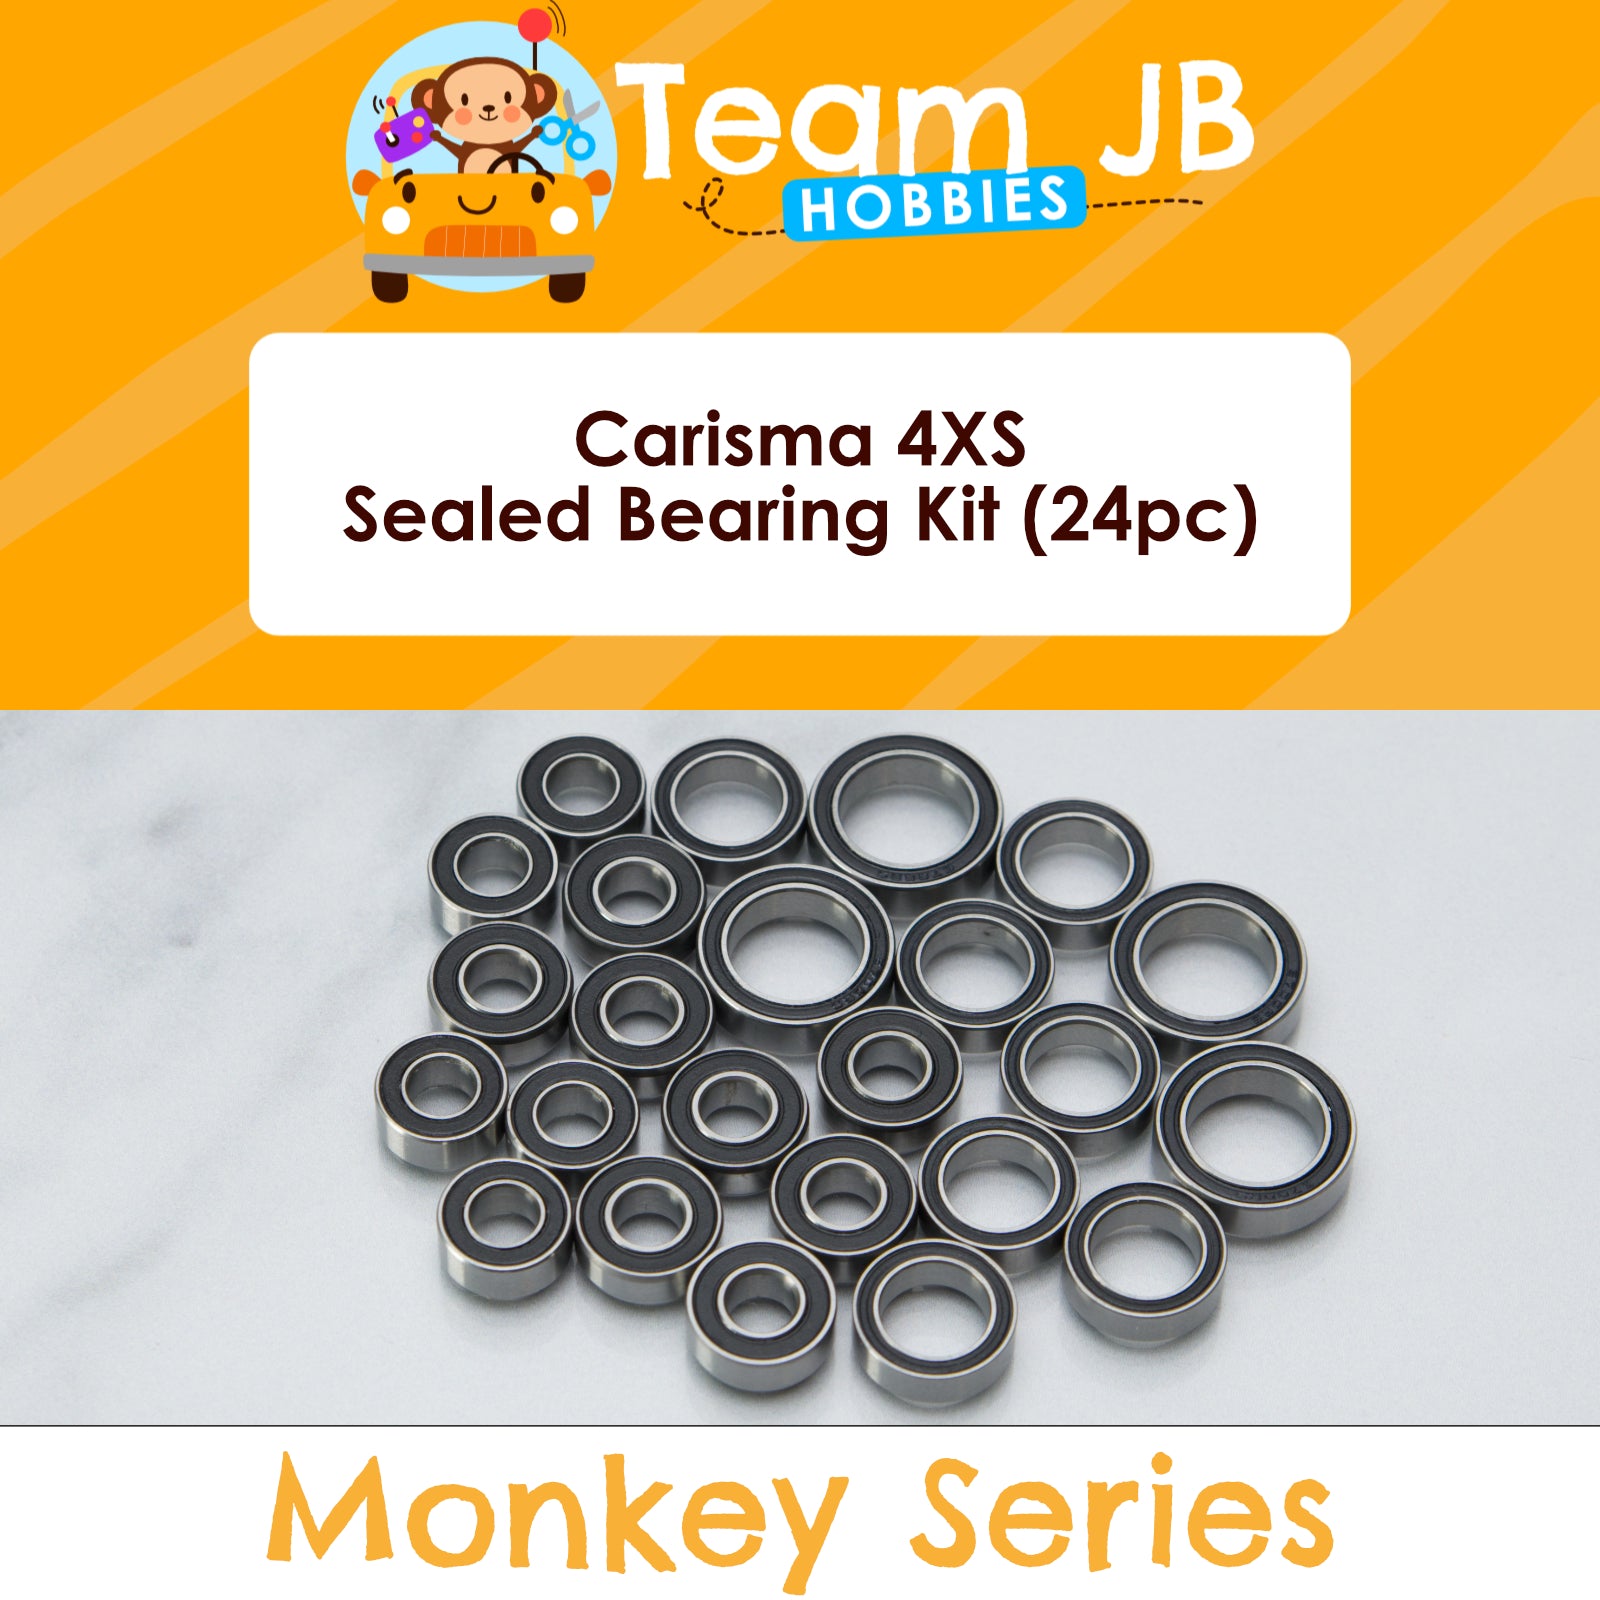 Carisma 4XS - Sealed Bearing Kit